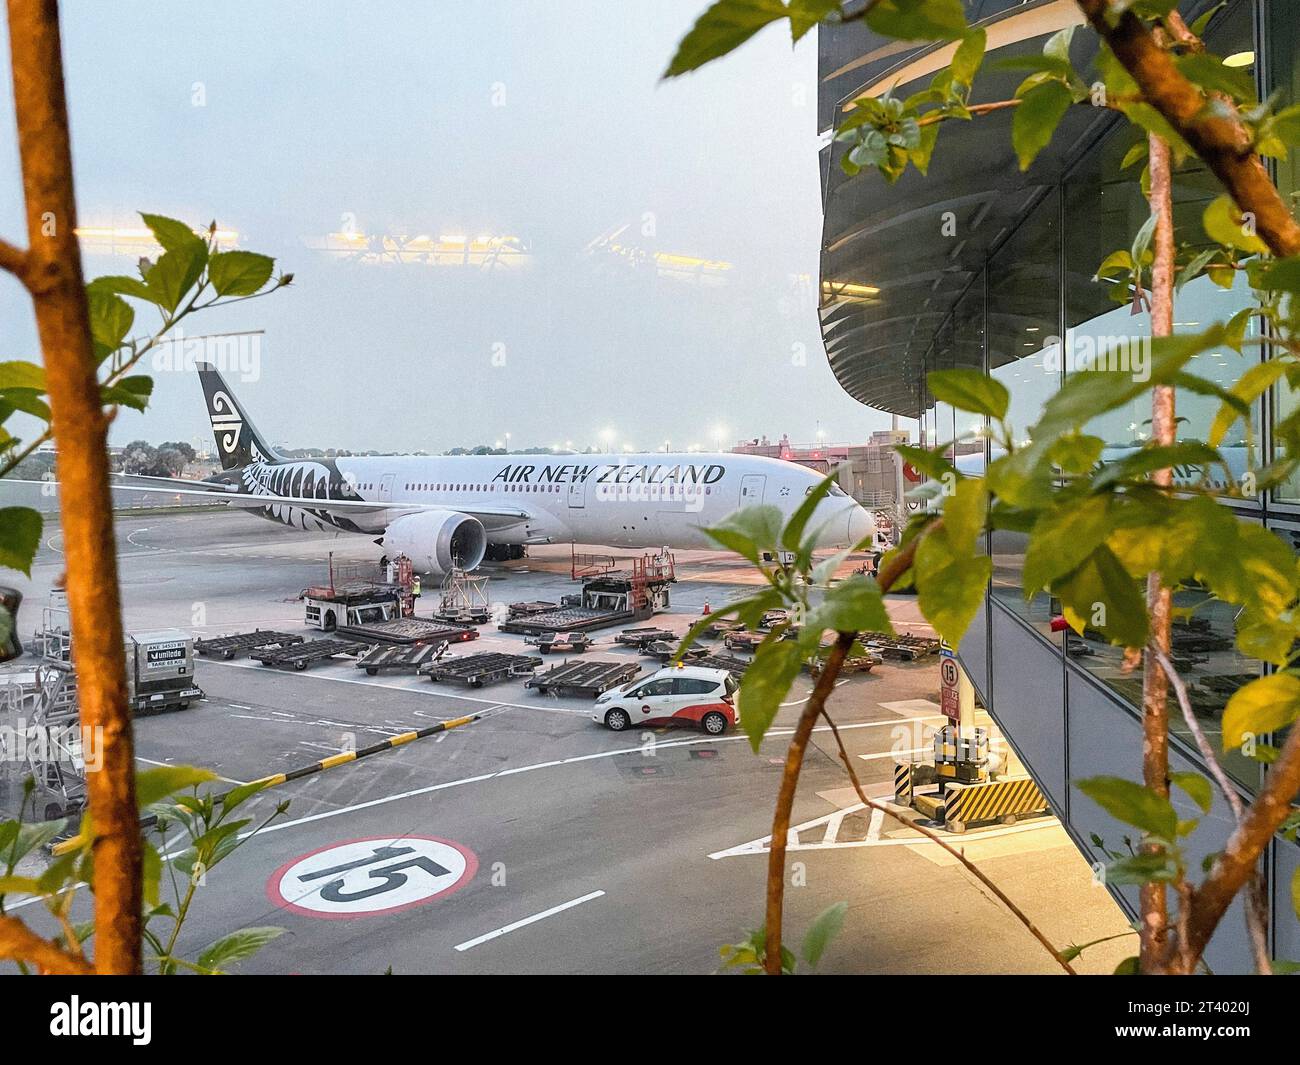 Singapore, Singapore airport, Air New Zealand plane Stock Photo